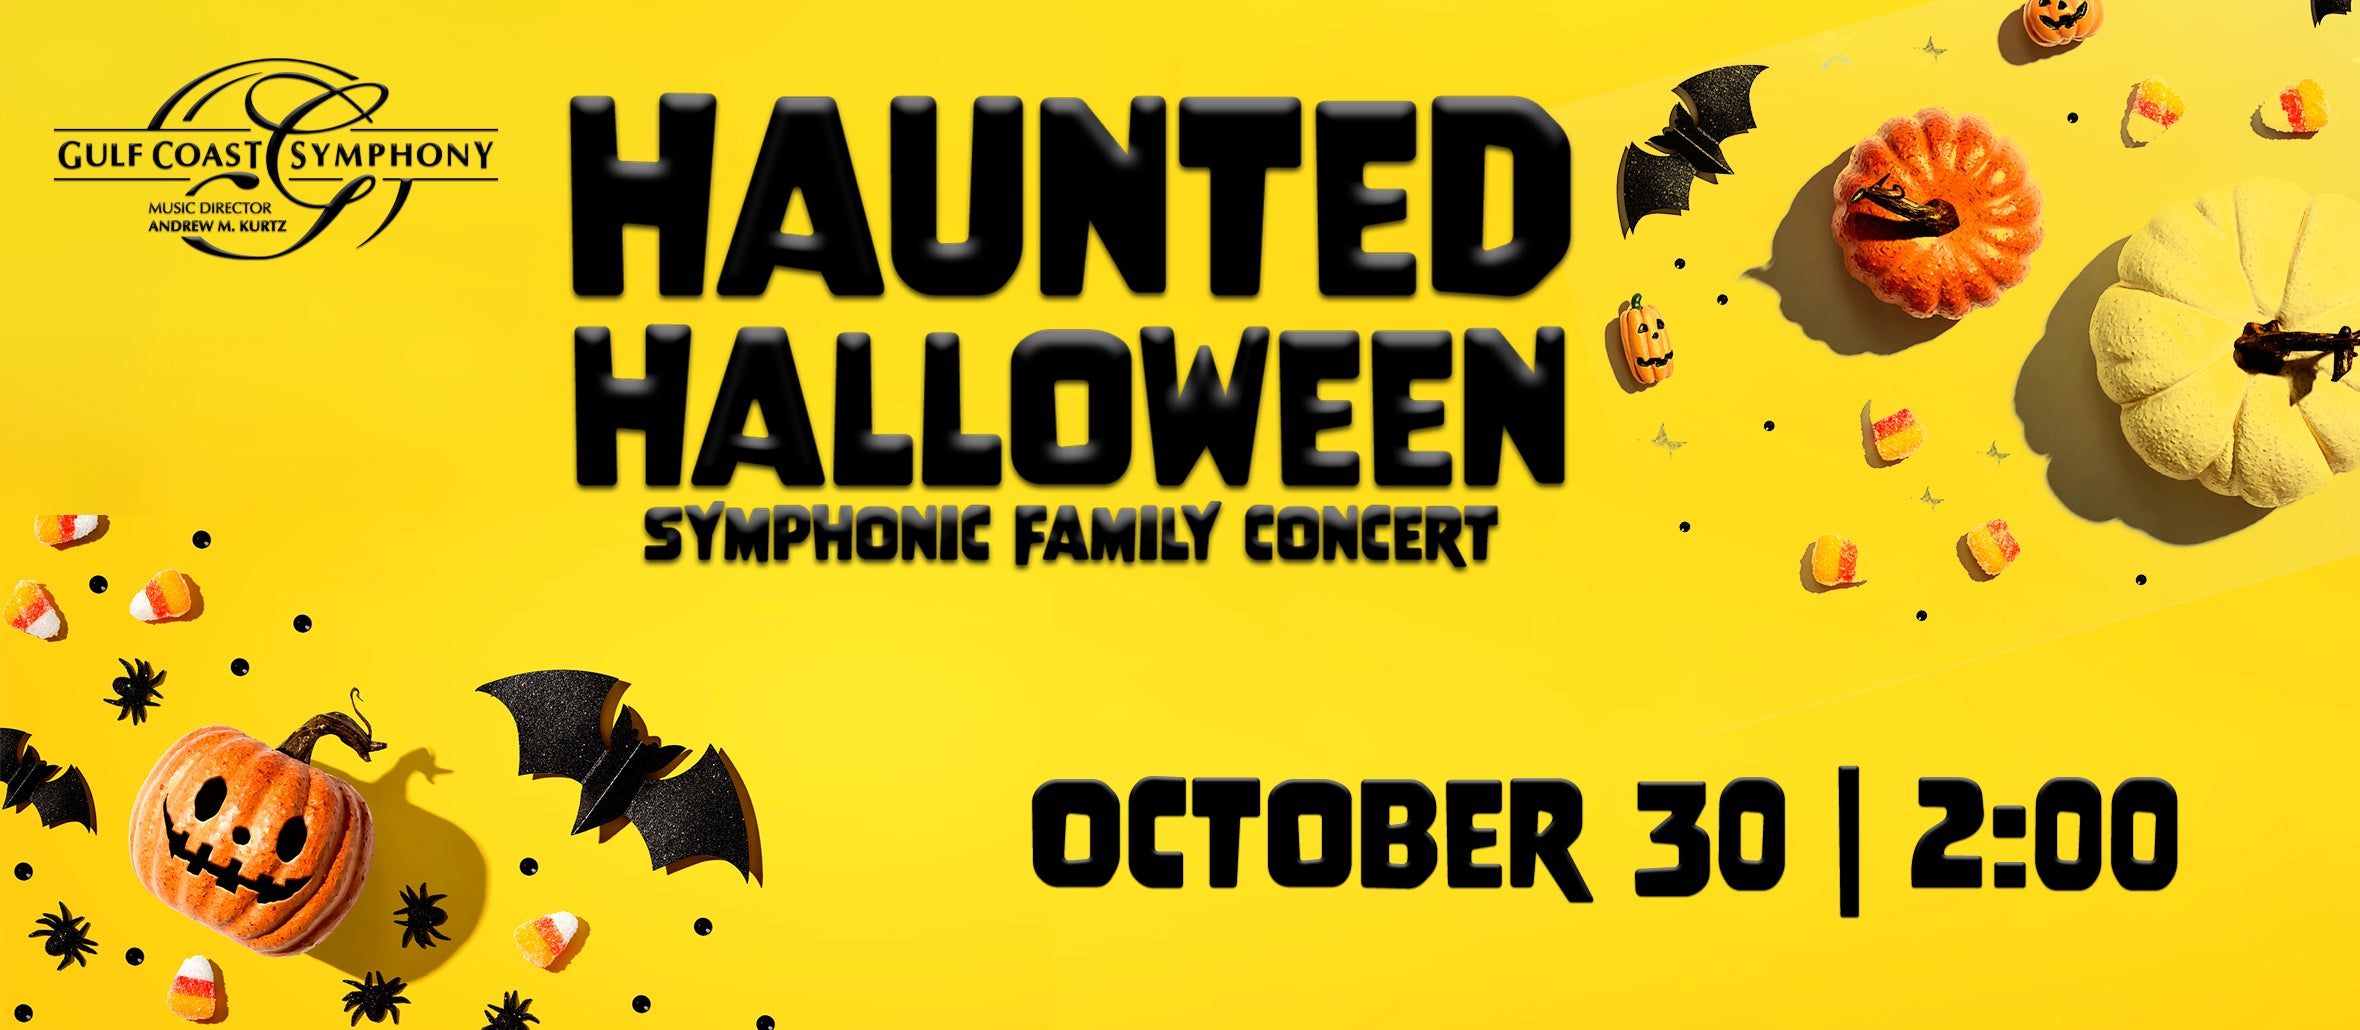 Gulf Coast Symphony: Haunted Halloween